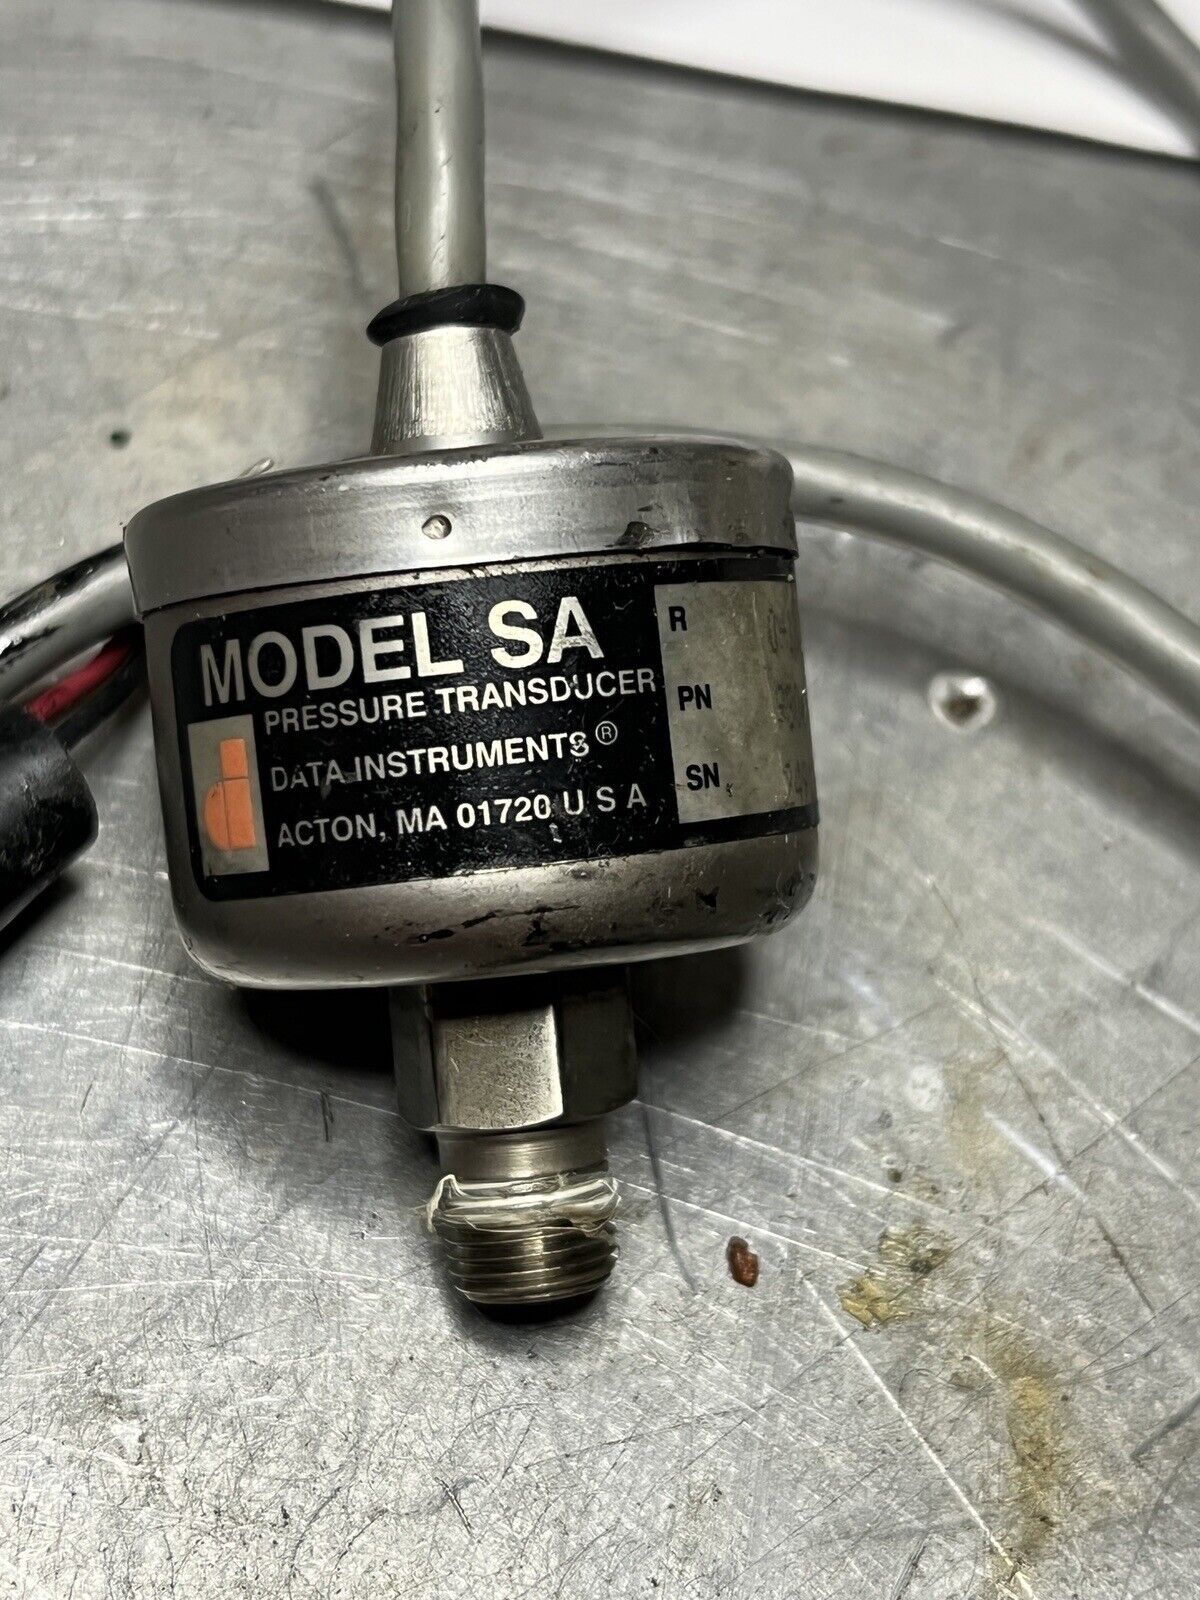 Data Instruments 9306402 Model SA Pressure Transducer 0-500 PSIS